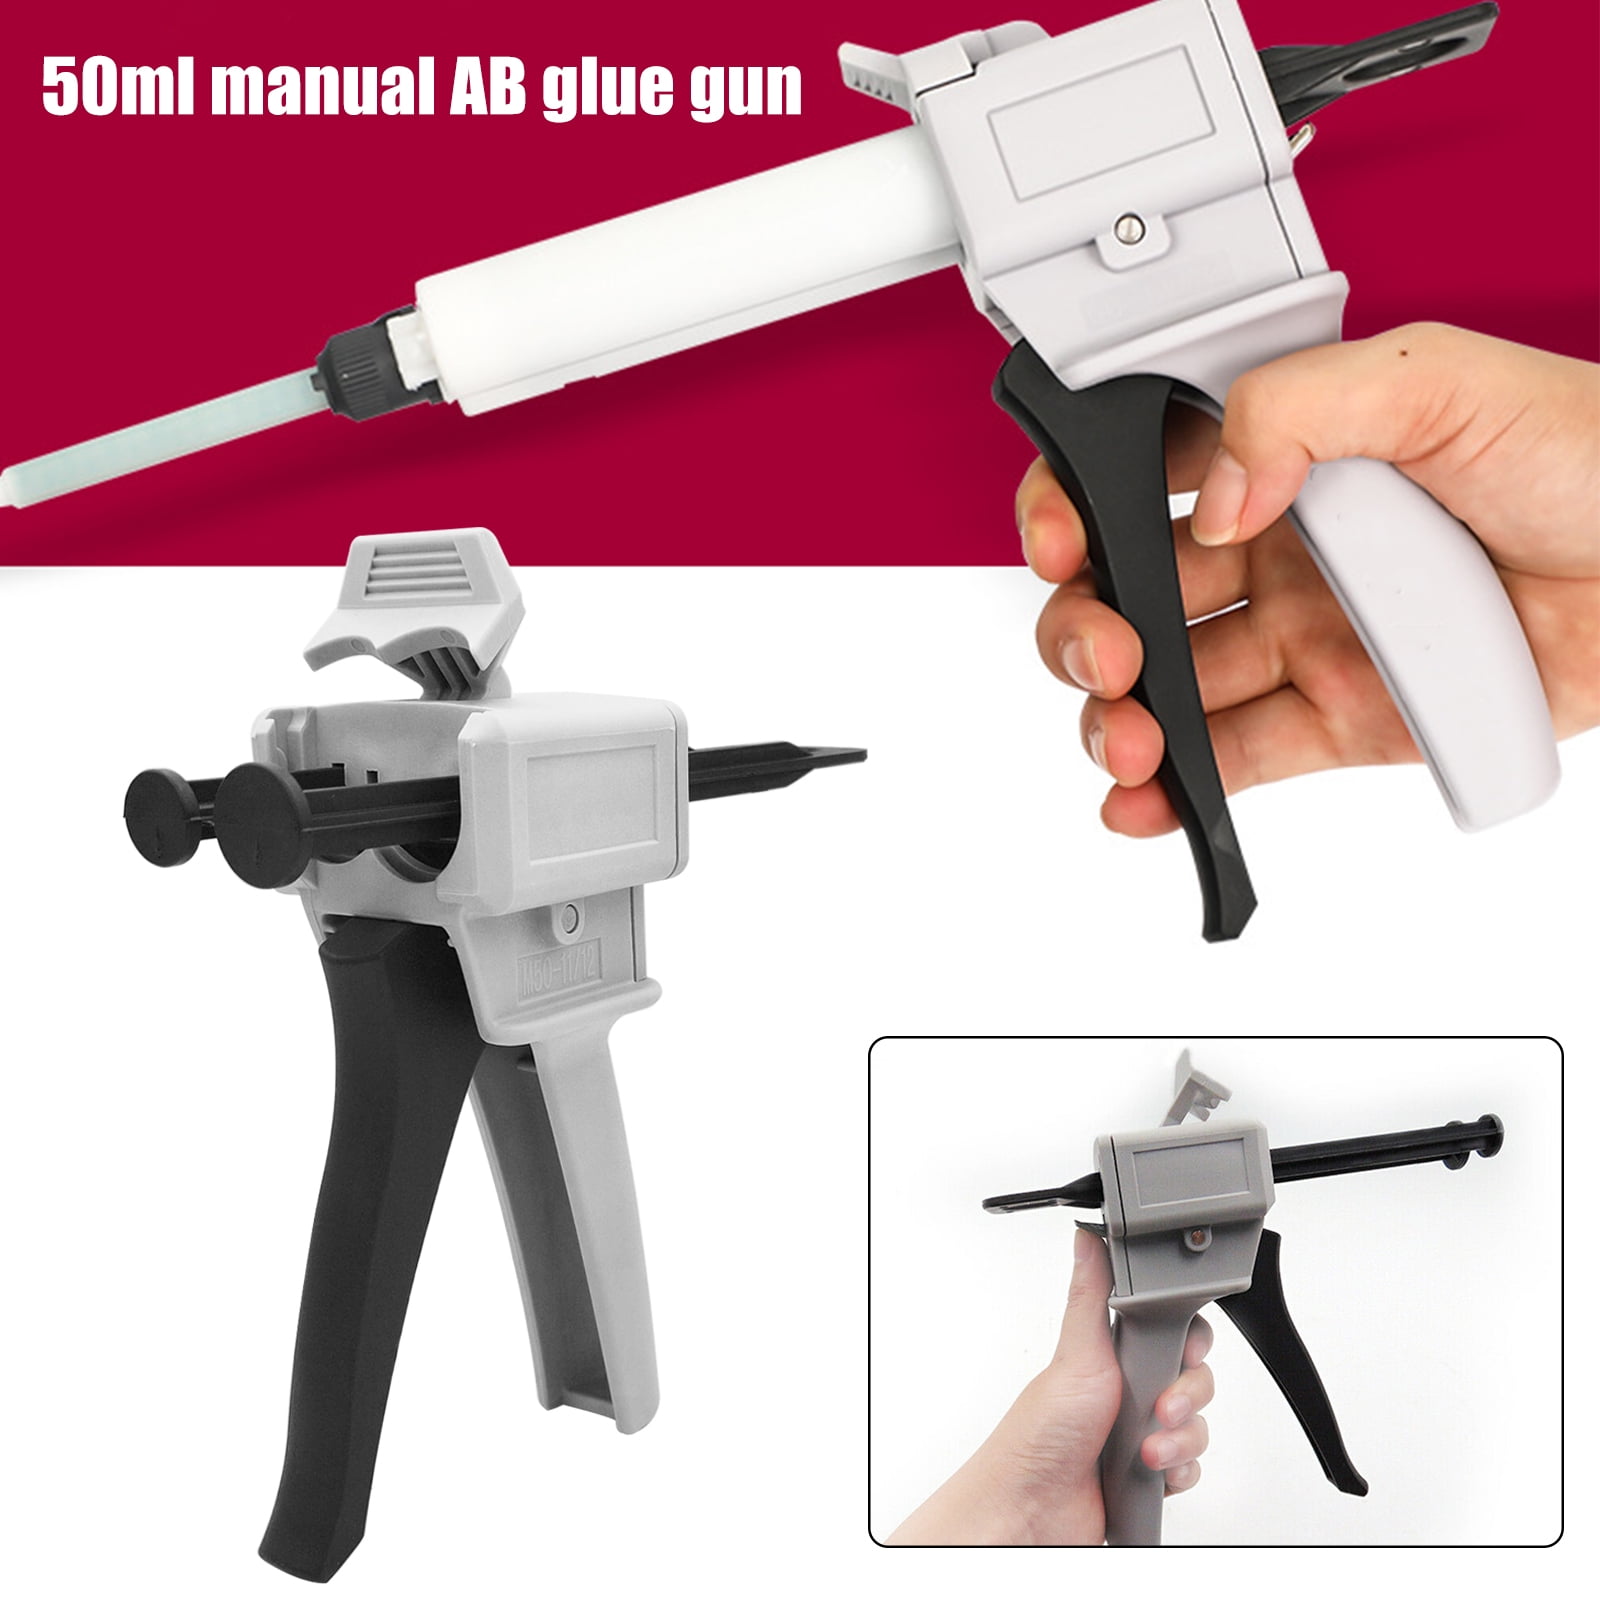 Clearance Manual 400ml Applicator Glue Dispensing Gun for AB Glue Adhesive New 